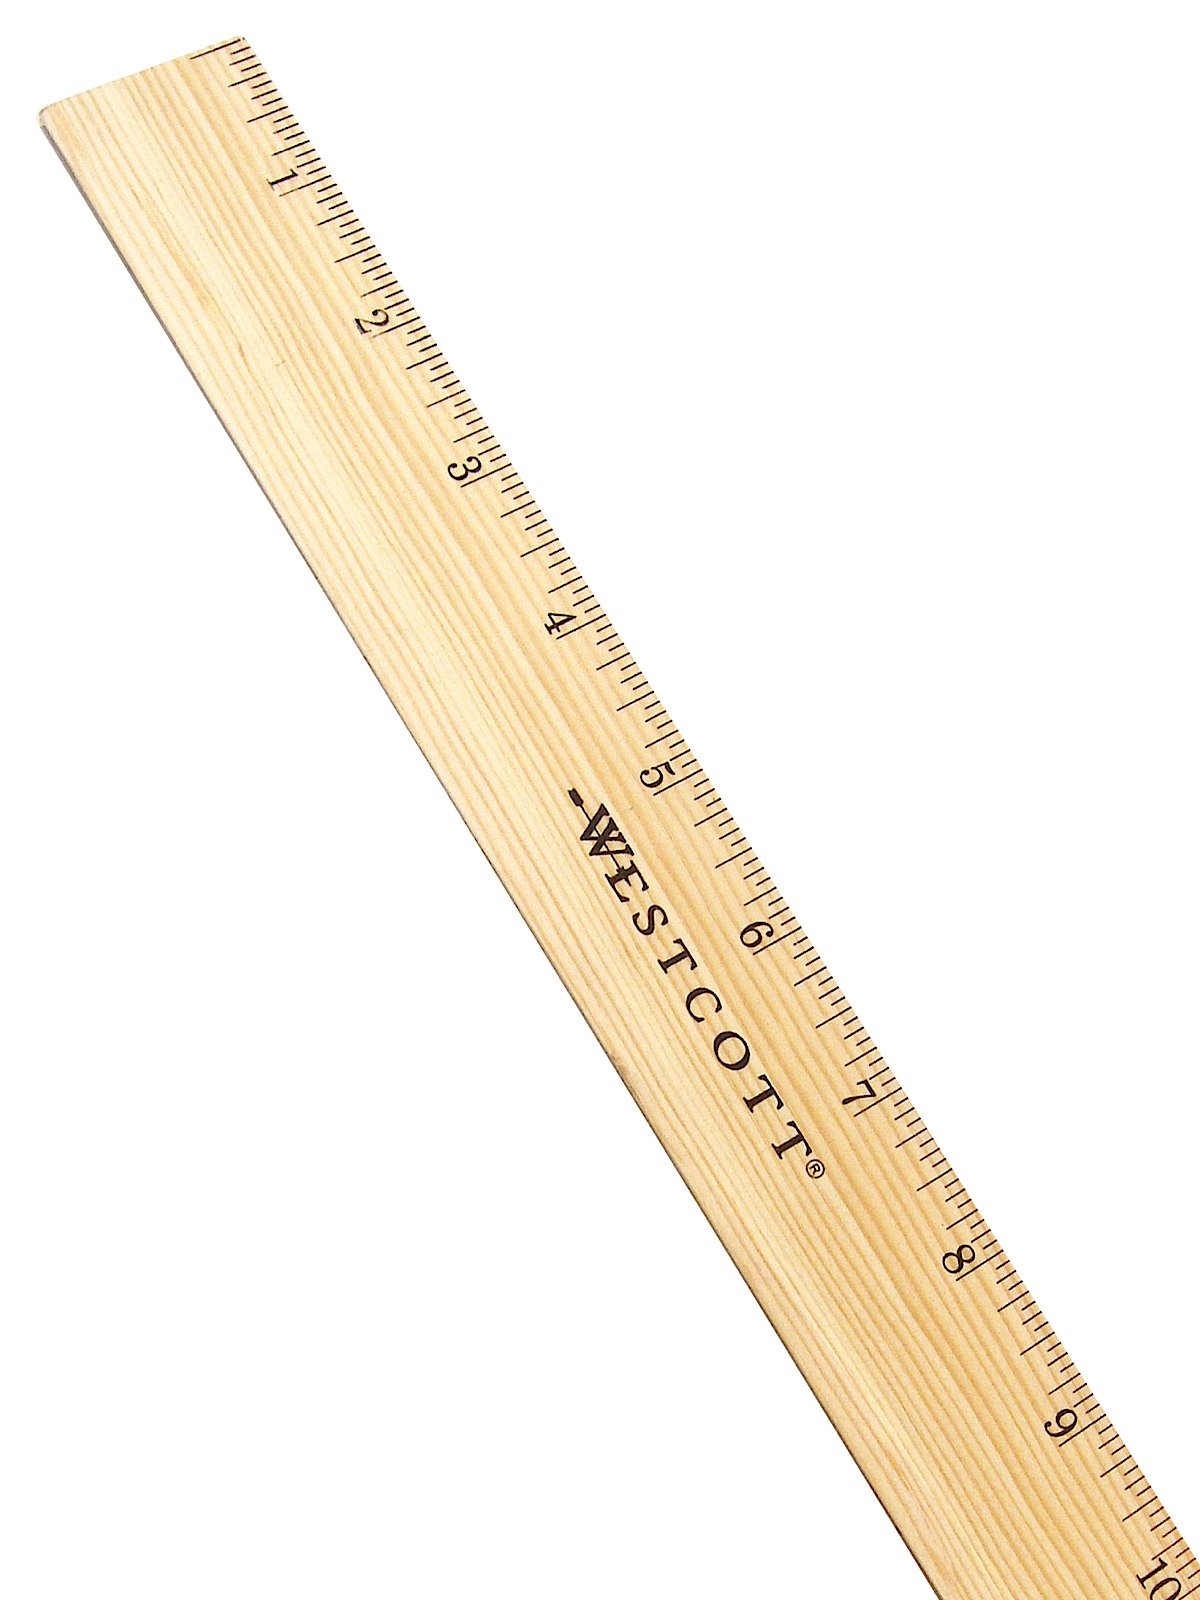 Acme Flexible Wood Ruler